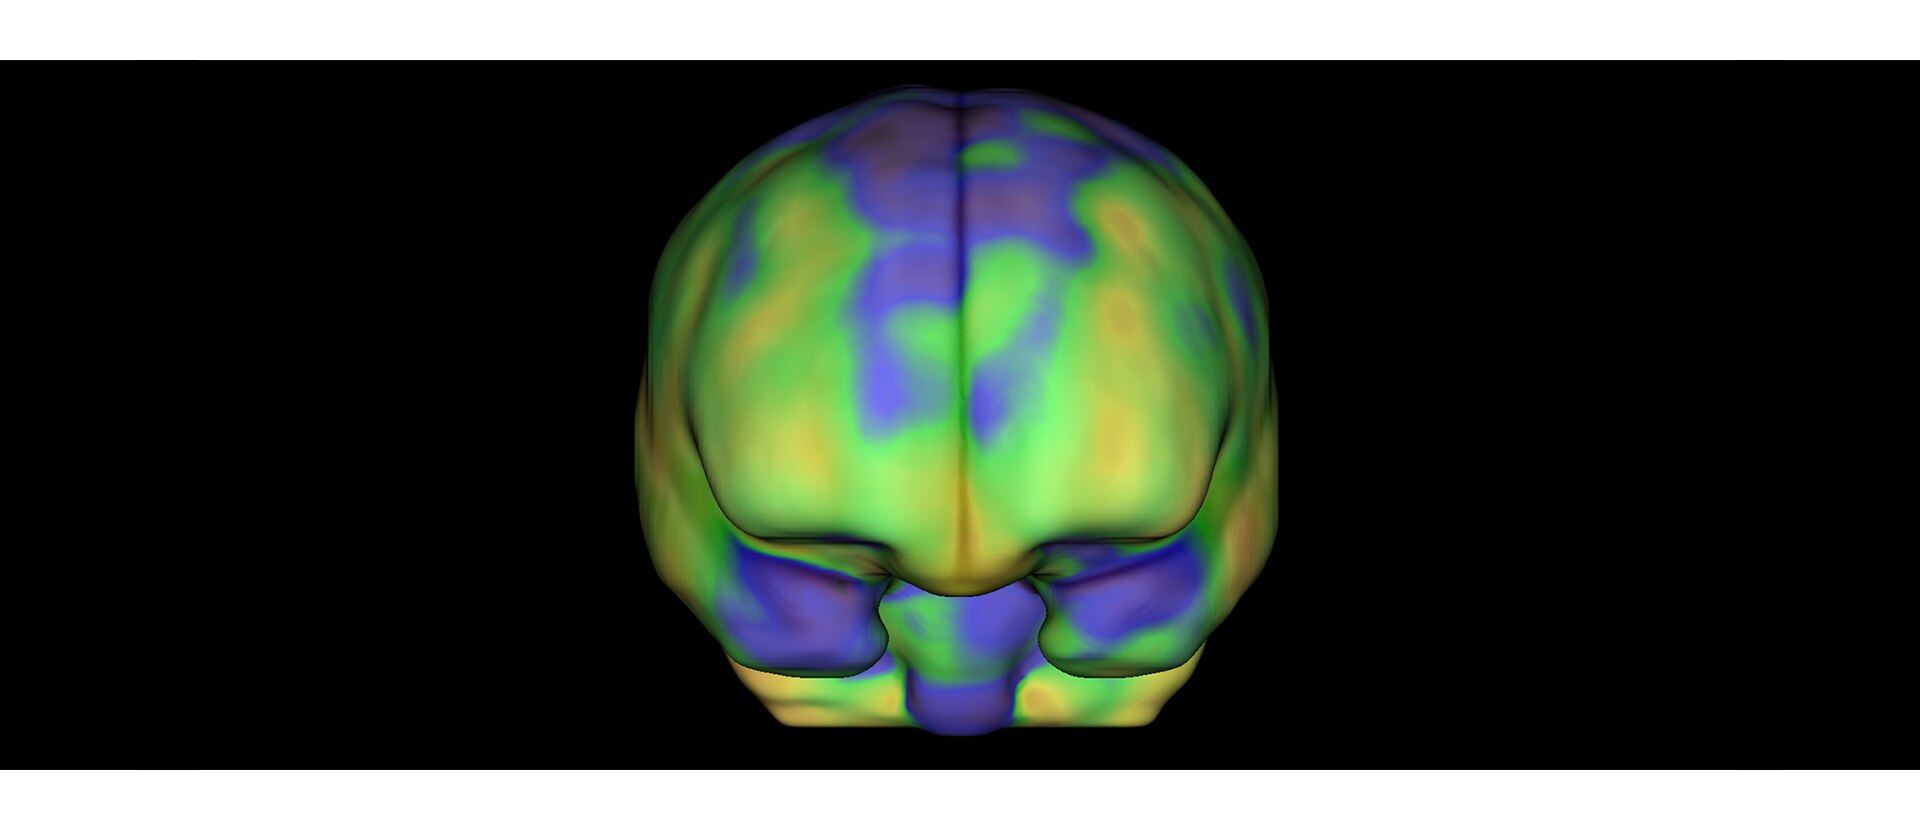 GEHC Xeleris 4 DR Q Brain Image 1 v1